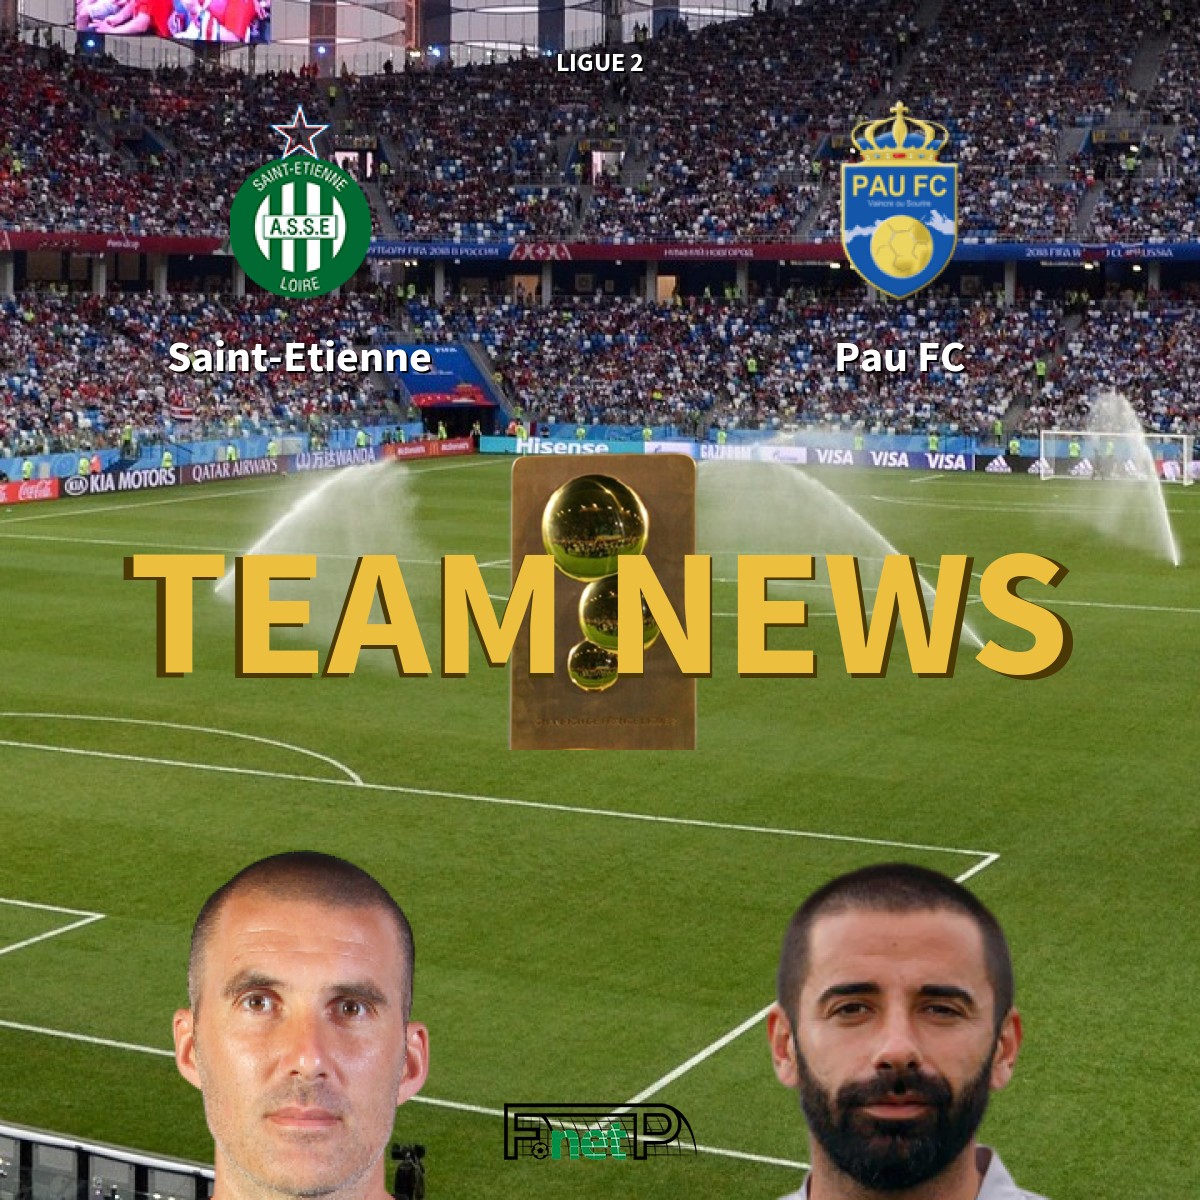 Ligue 2 News: Pau FC vs Annecy FC Confirmed Line-ups